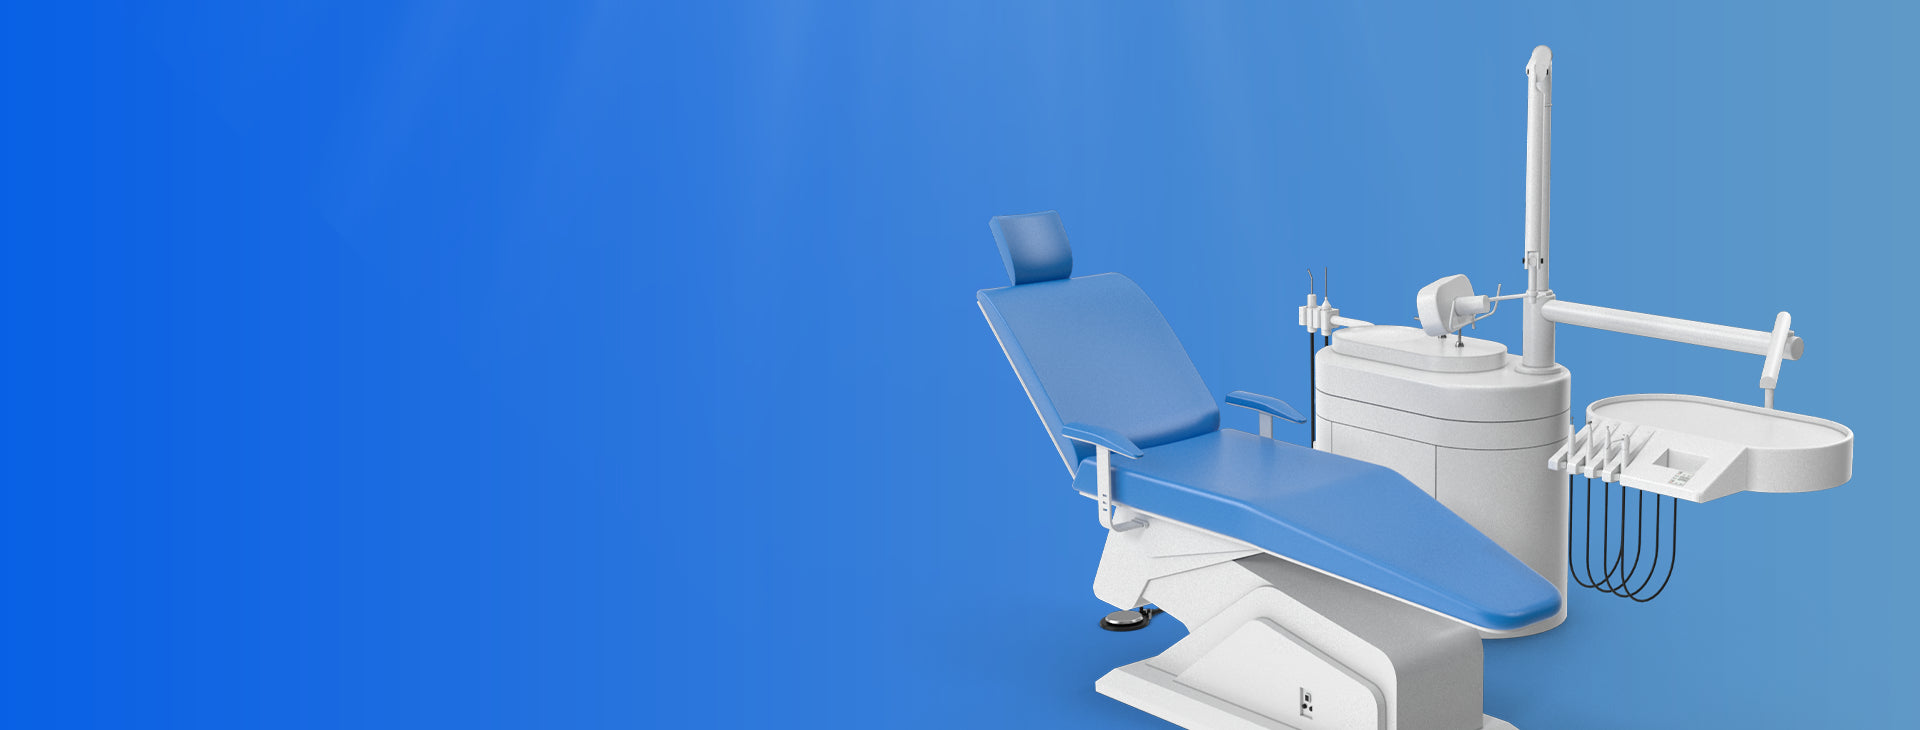 Checkup Chair Dental